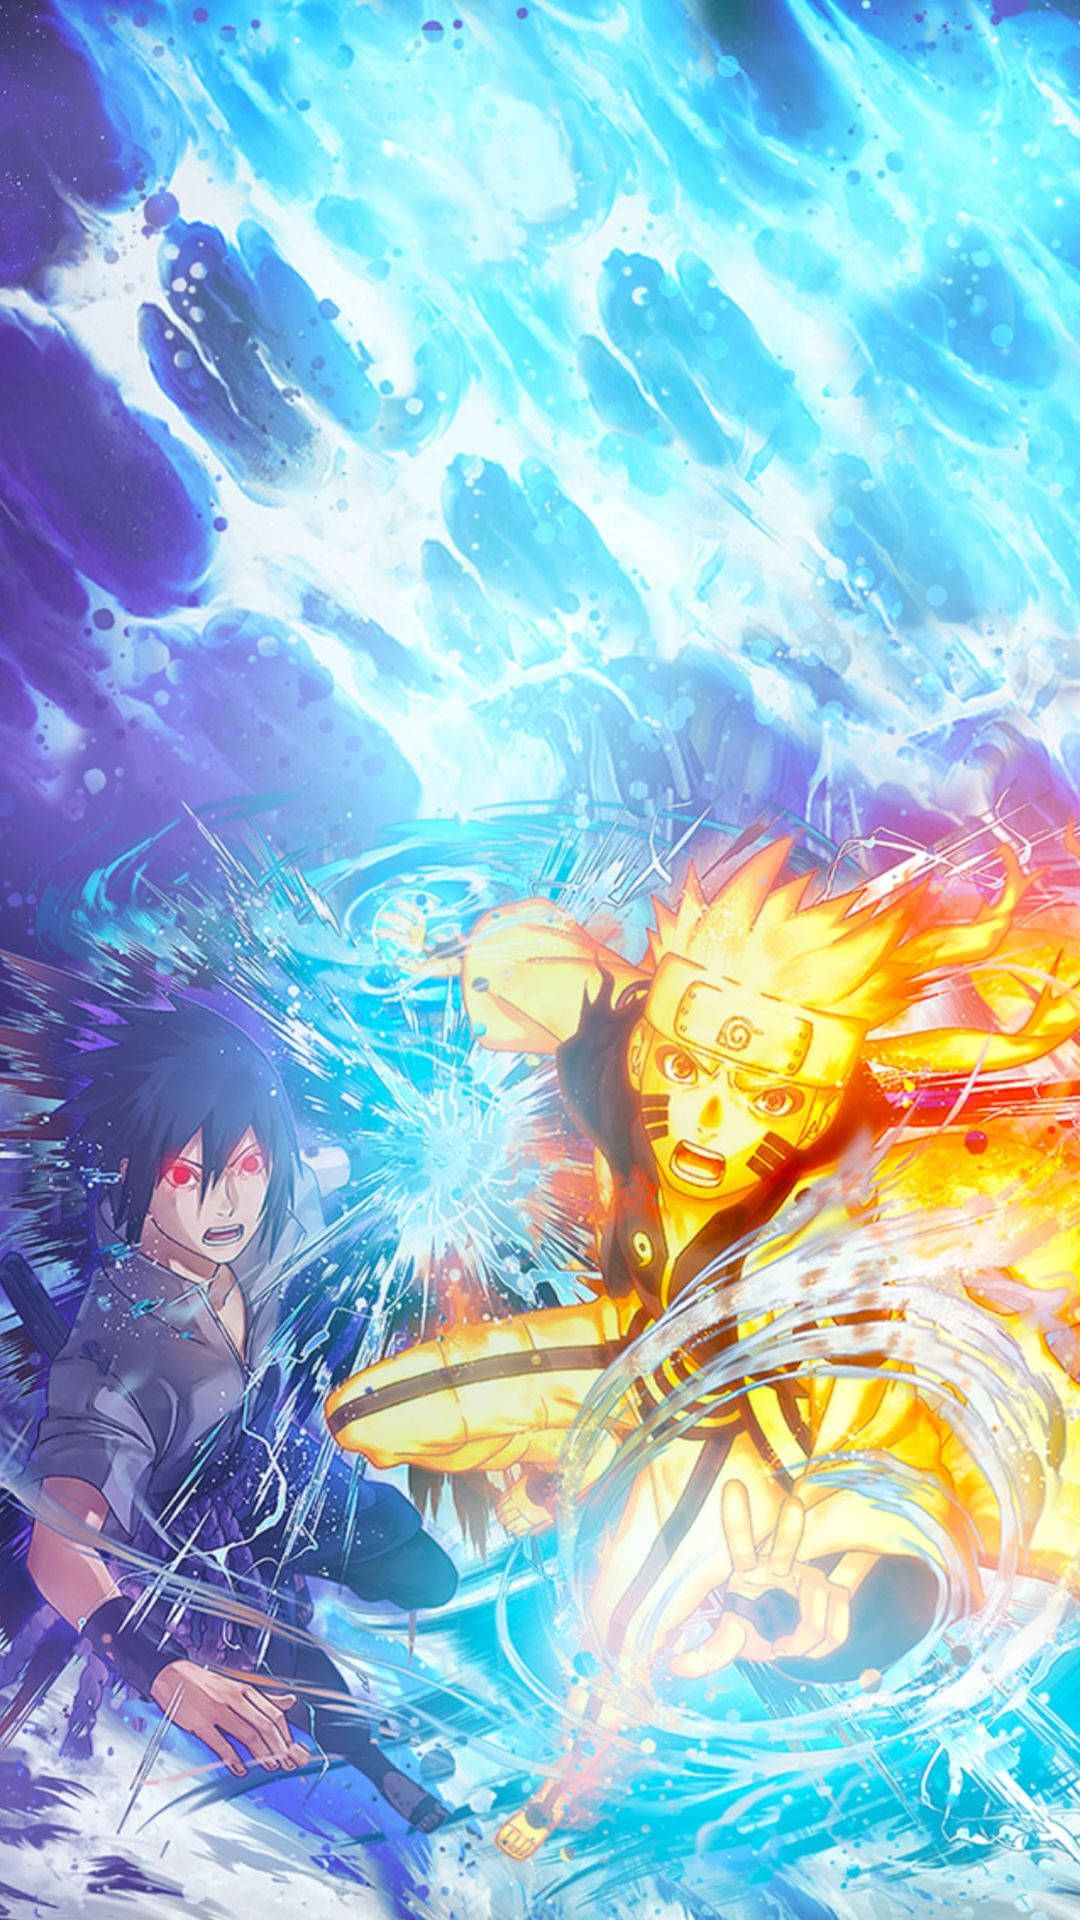 Impressive Sasuke Naruto iPhone Digital Art Wallpaper